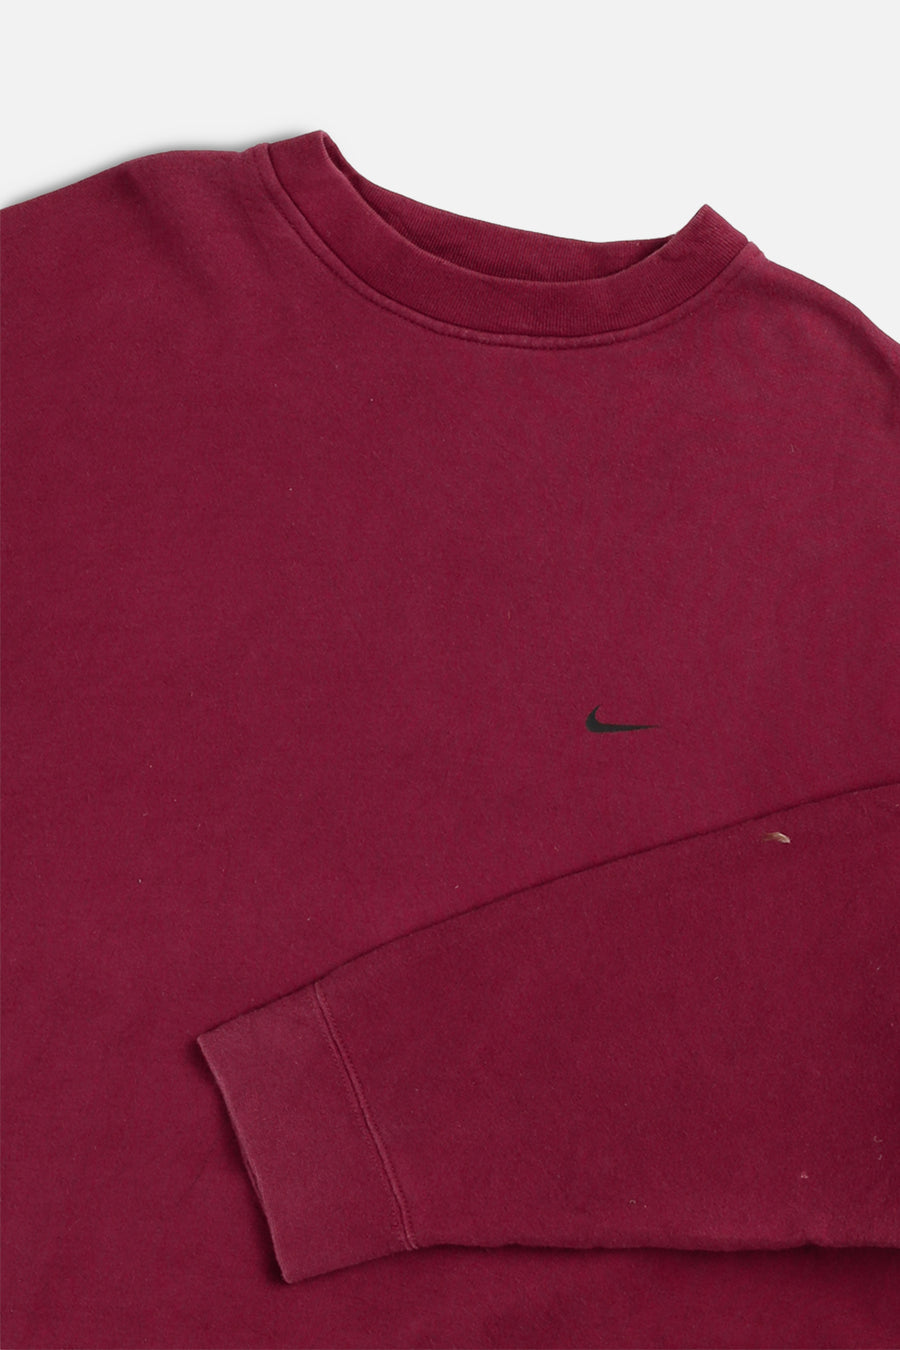 Vintage Nike Sweatshirt - L